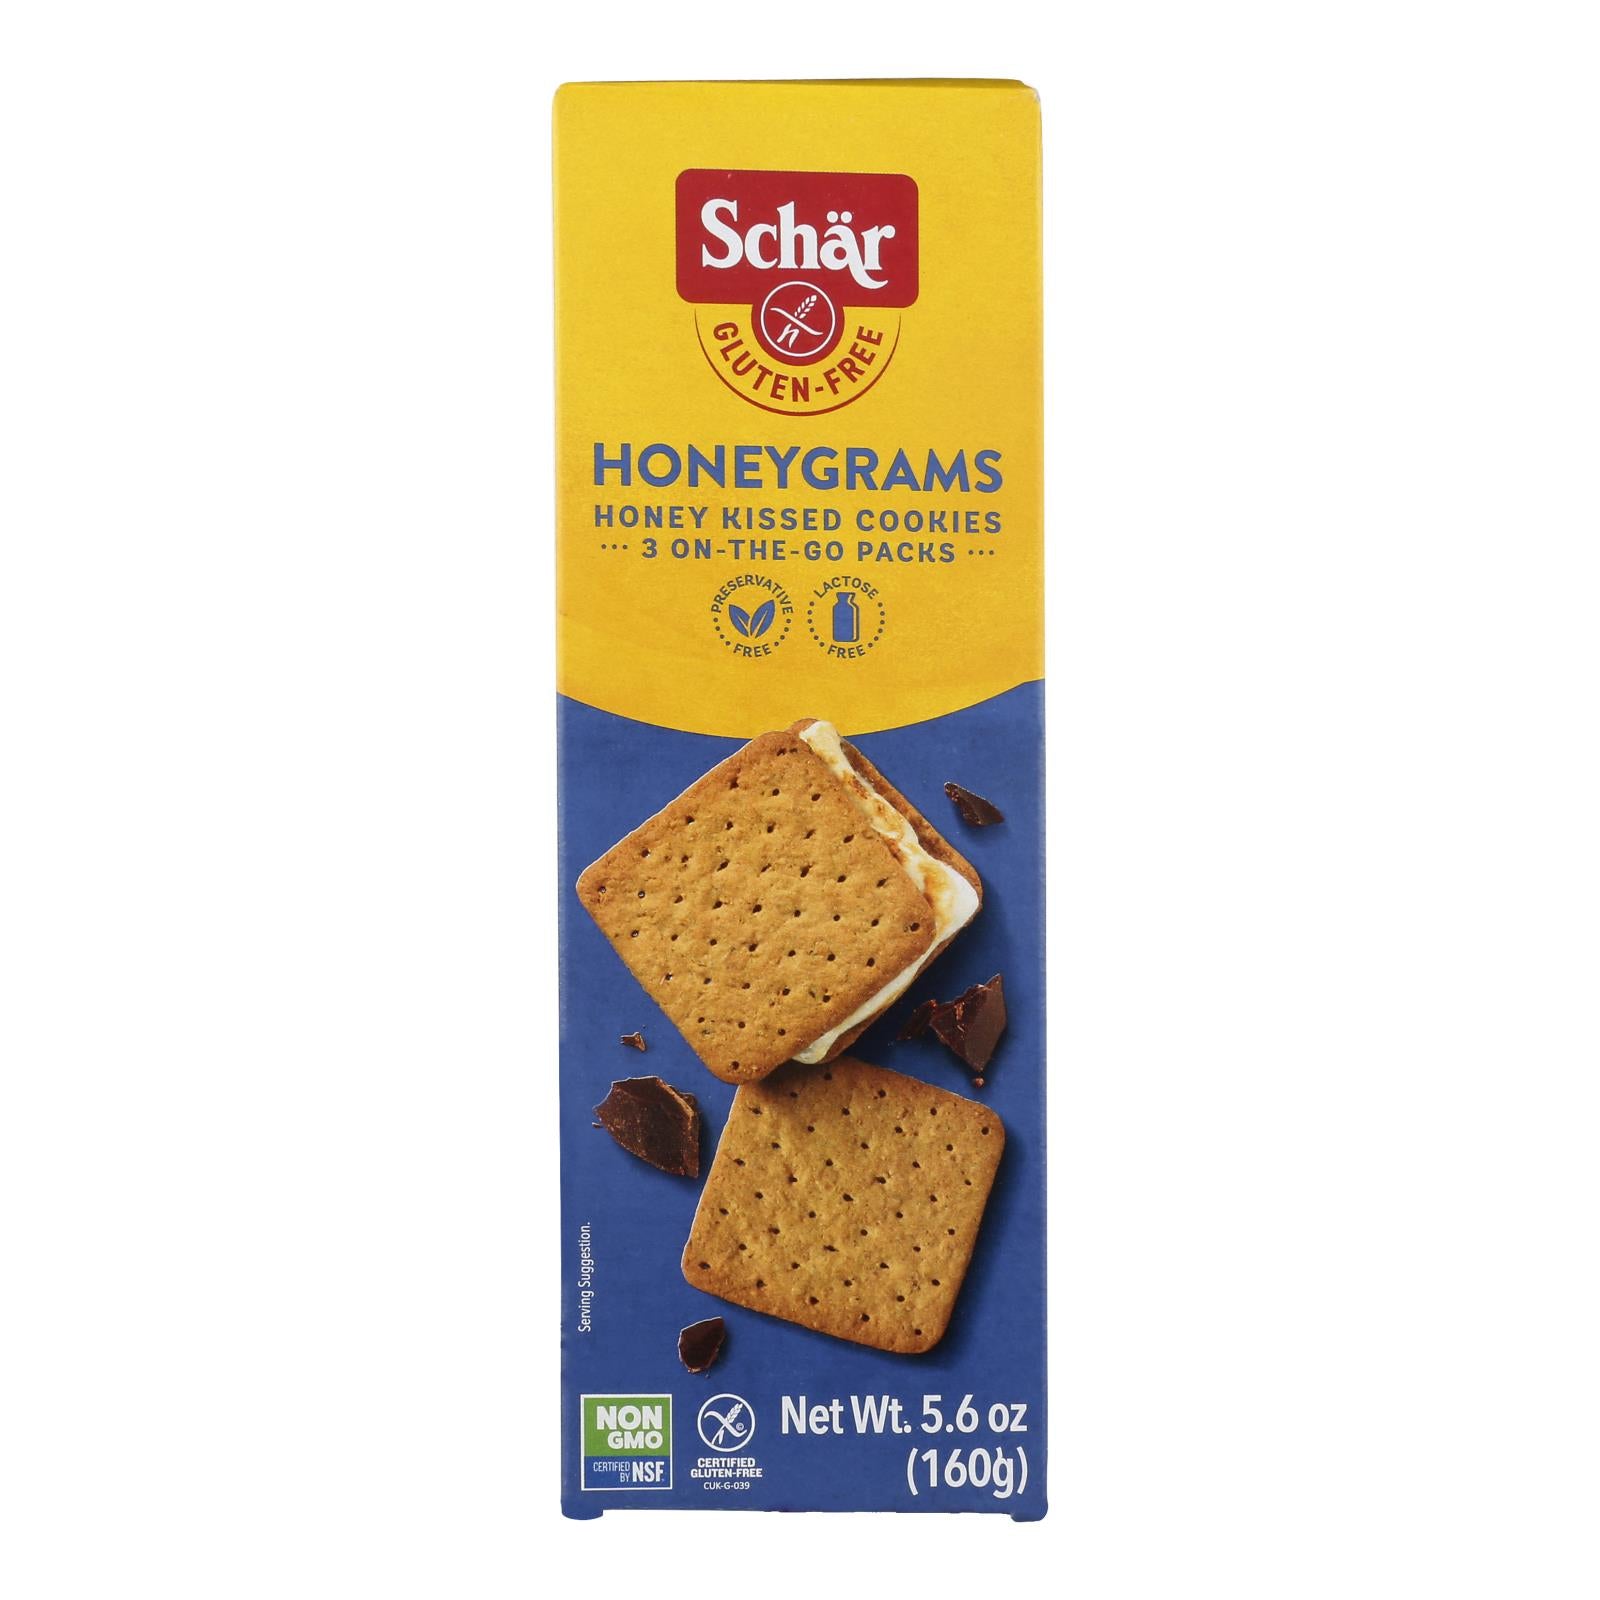 Schar - Crackers Honeygrams Gluten Free - Case Of 6-5.6 Oz